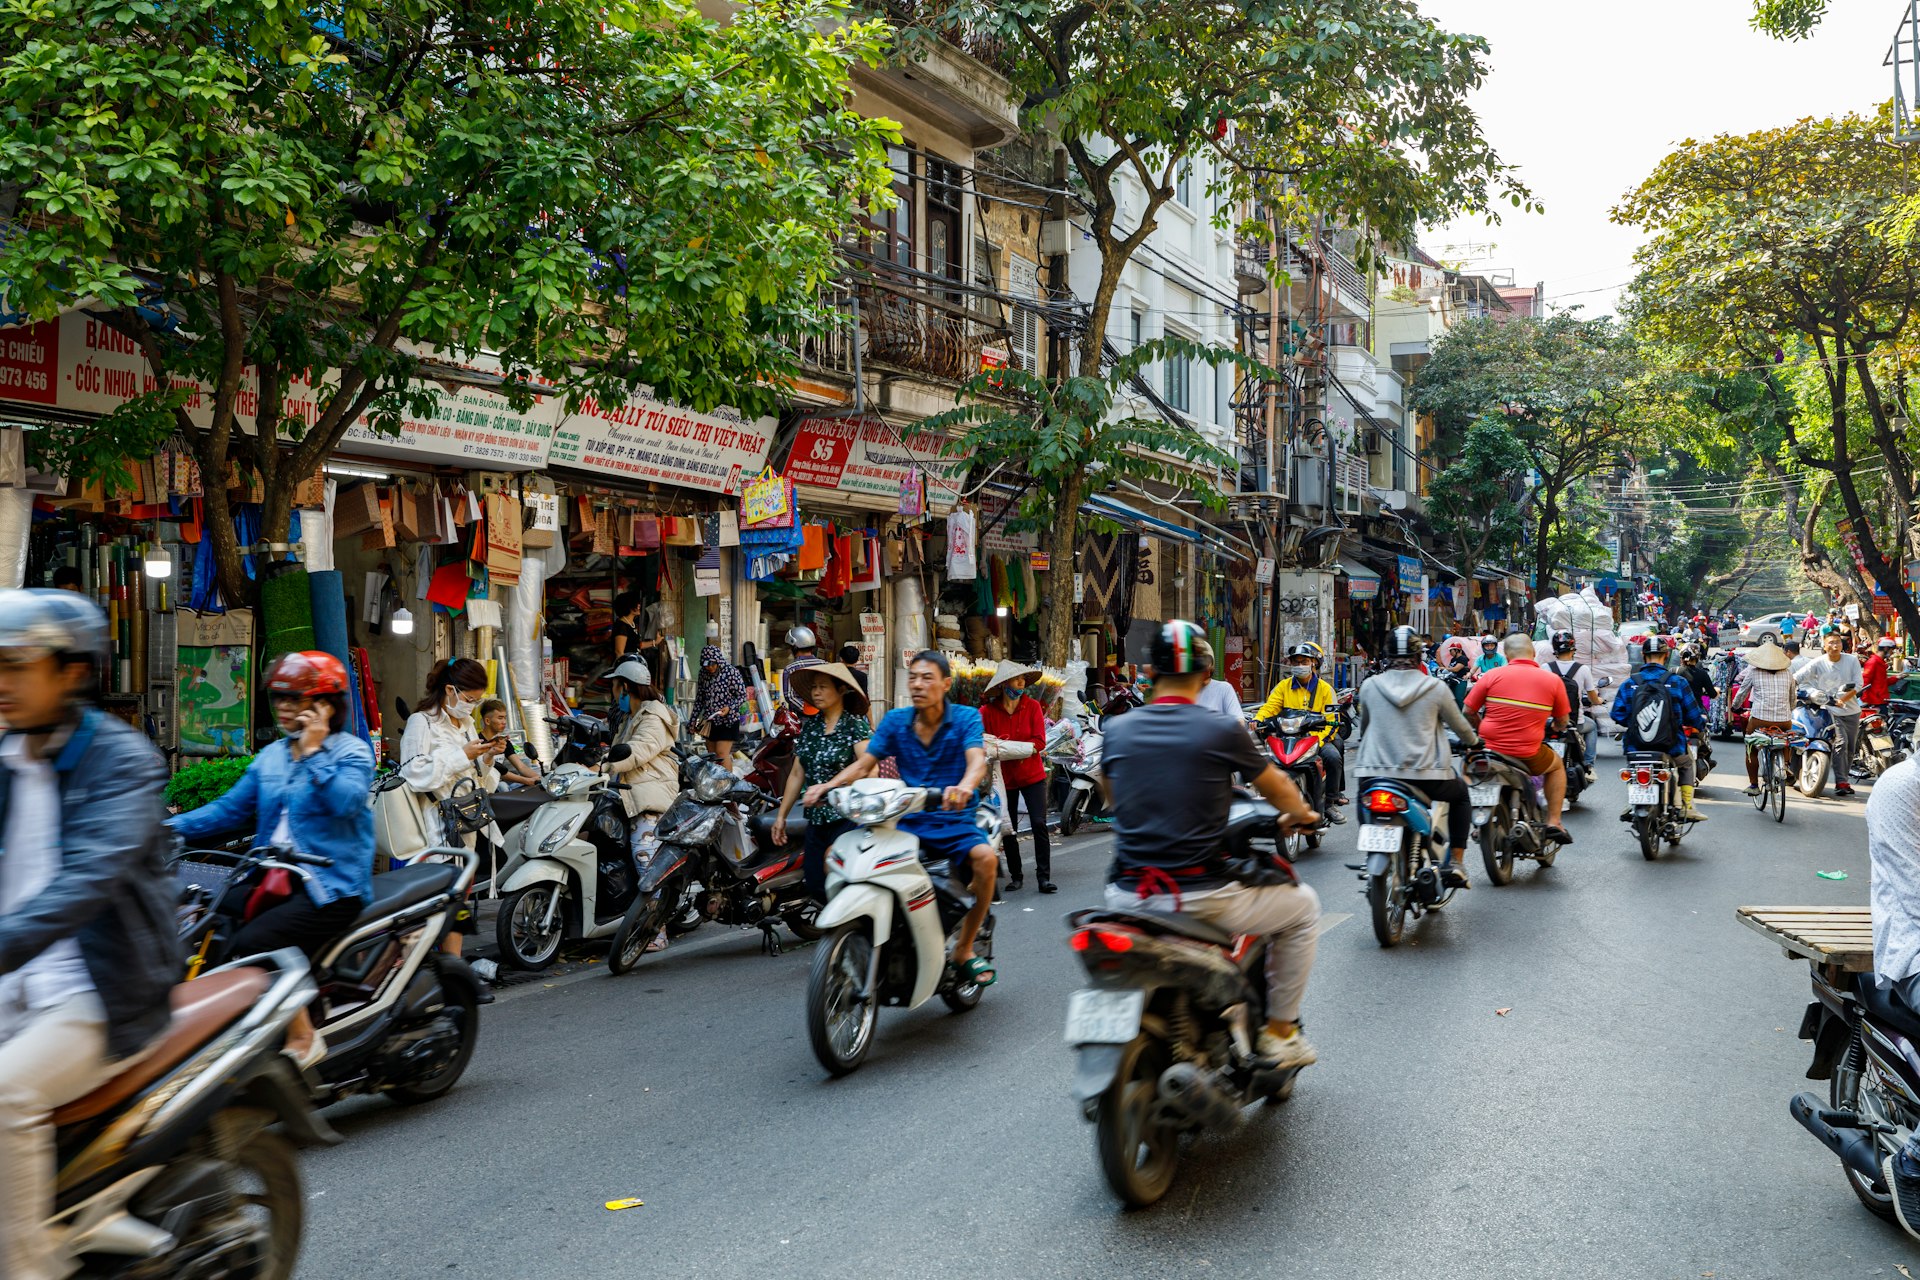 The city center and chaos traffic of Hanoi, Vietnam